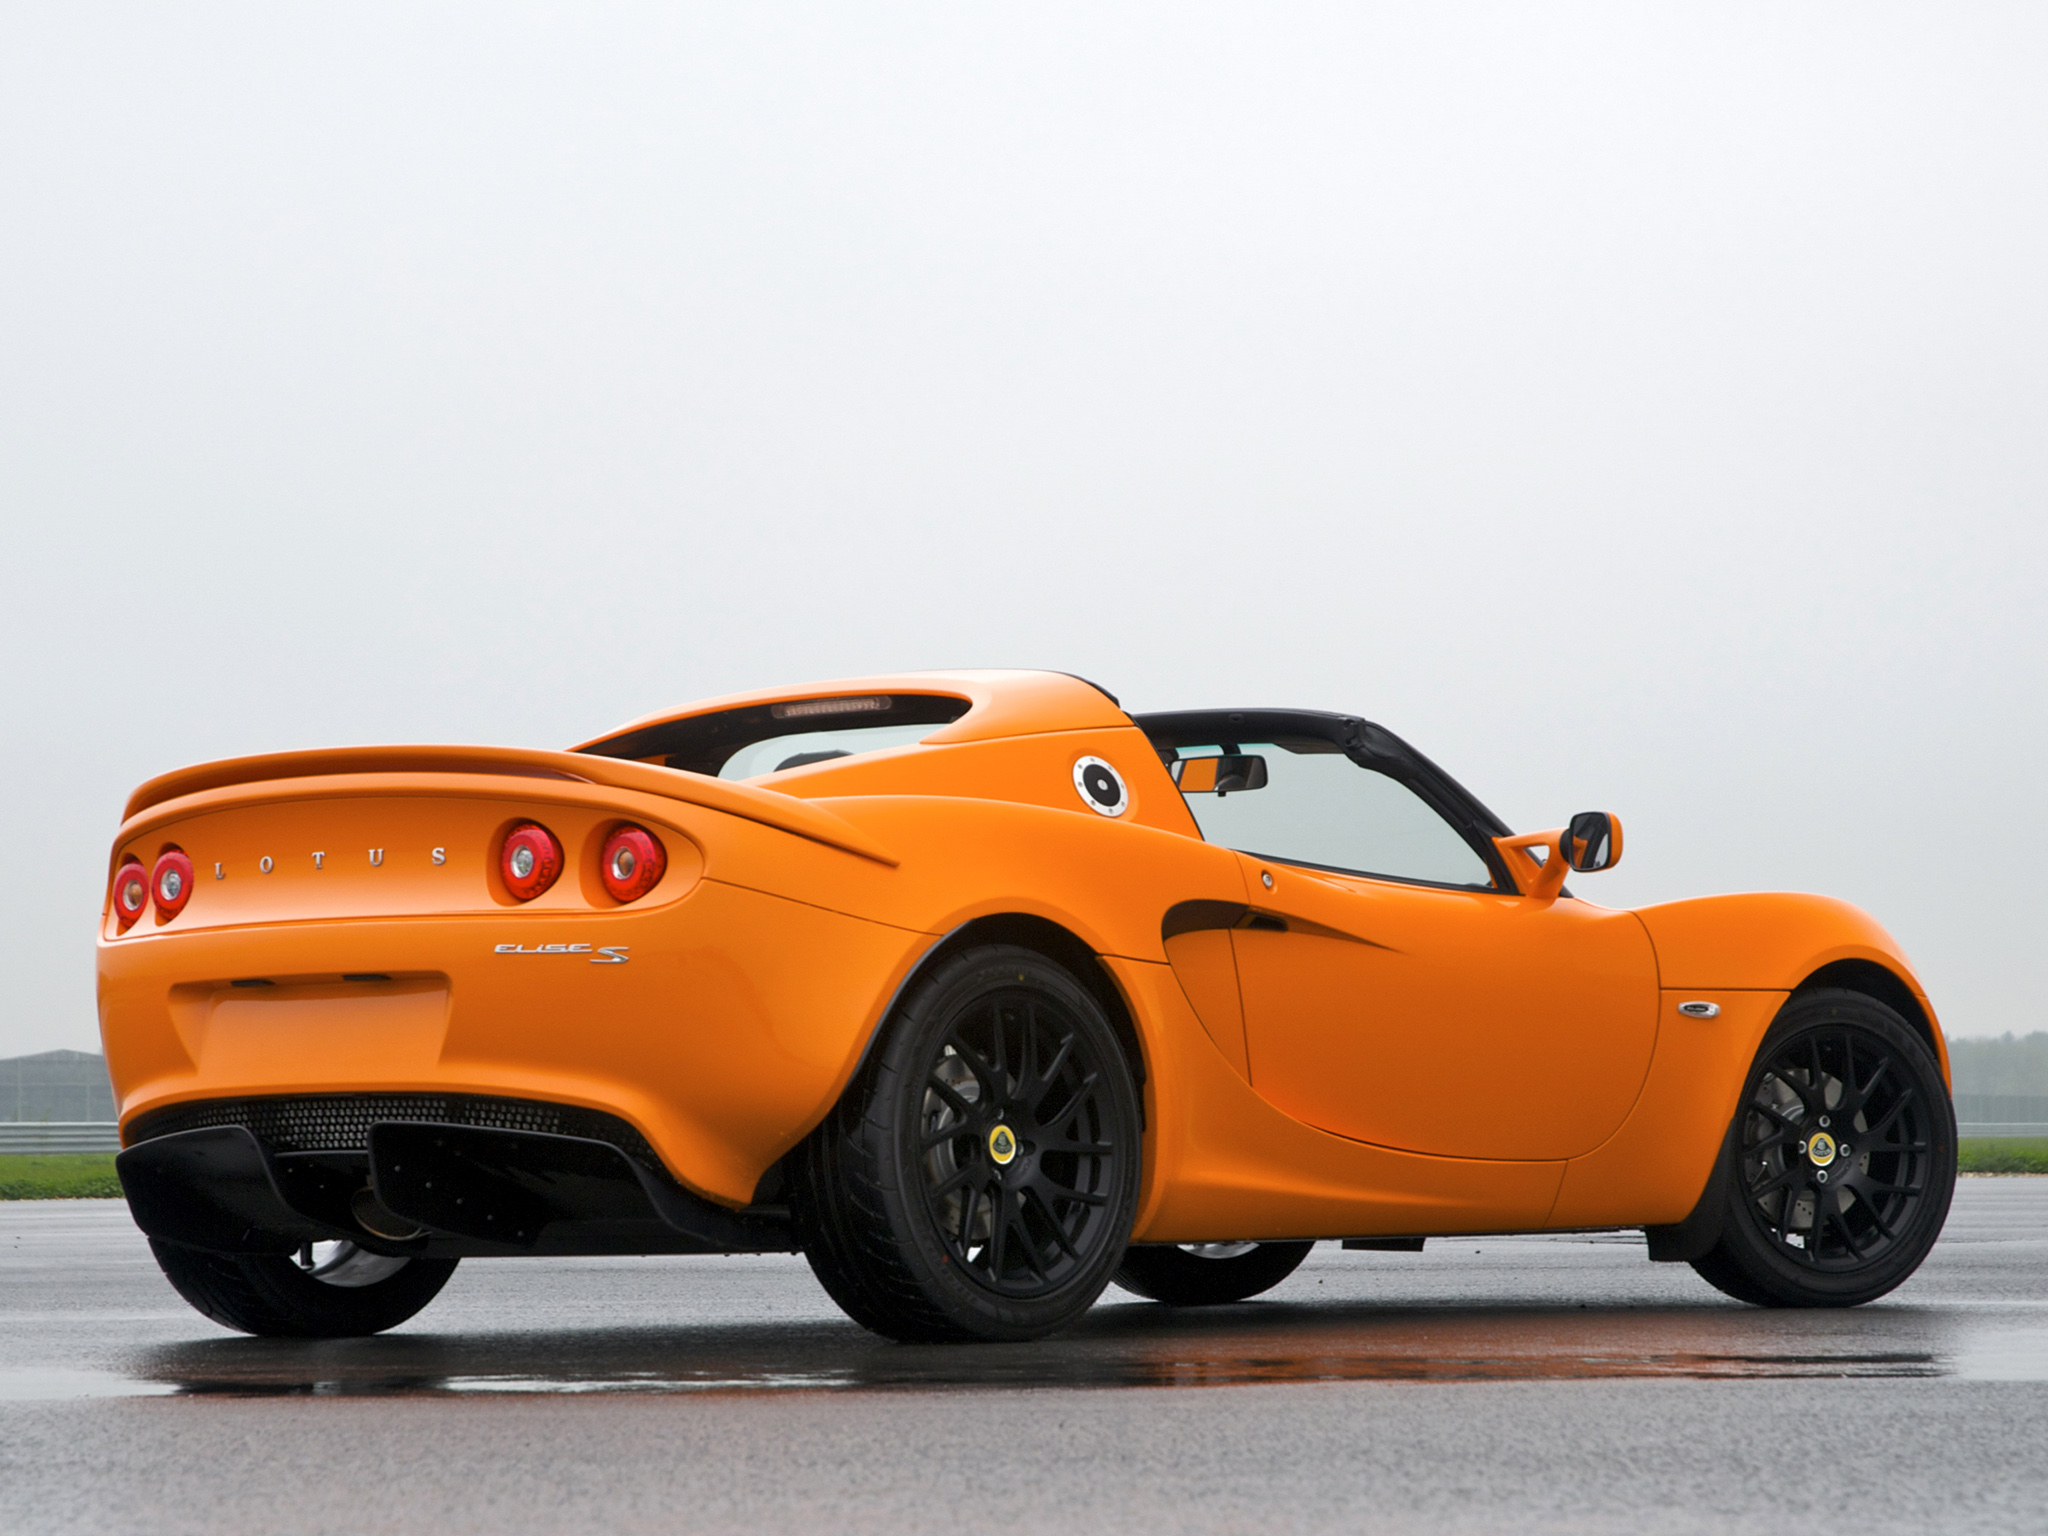 Afra Motor Unveils Lotus Sports Cars  Financial Tribune